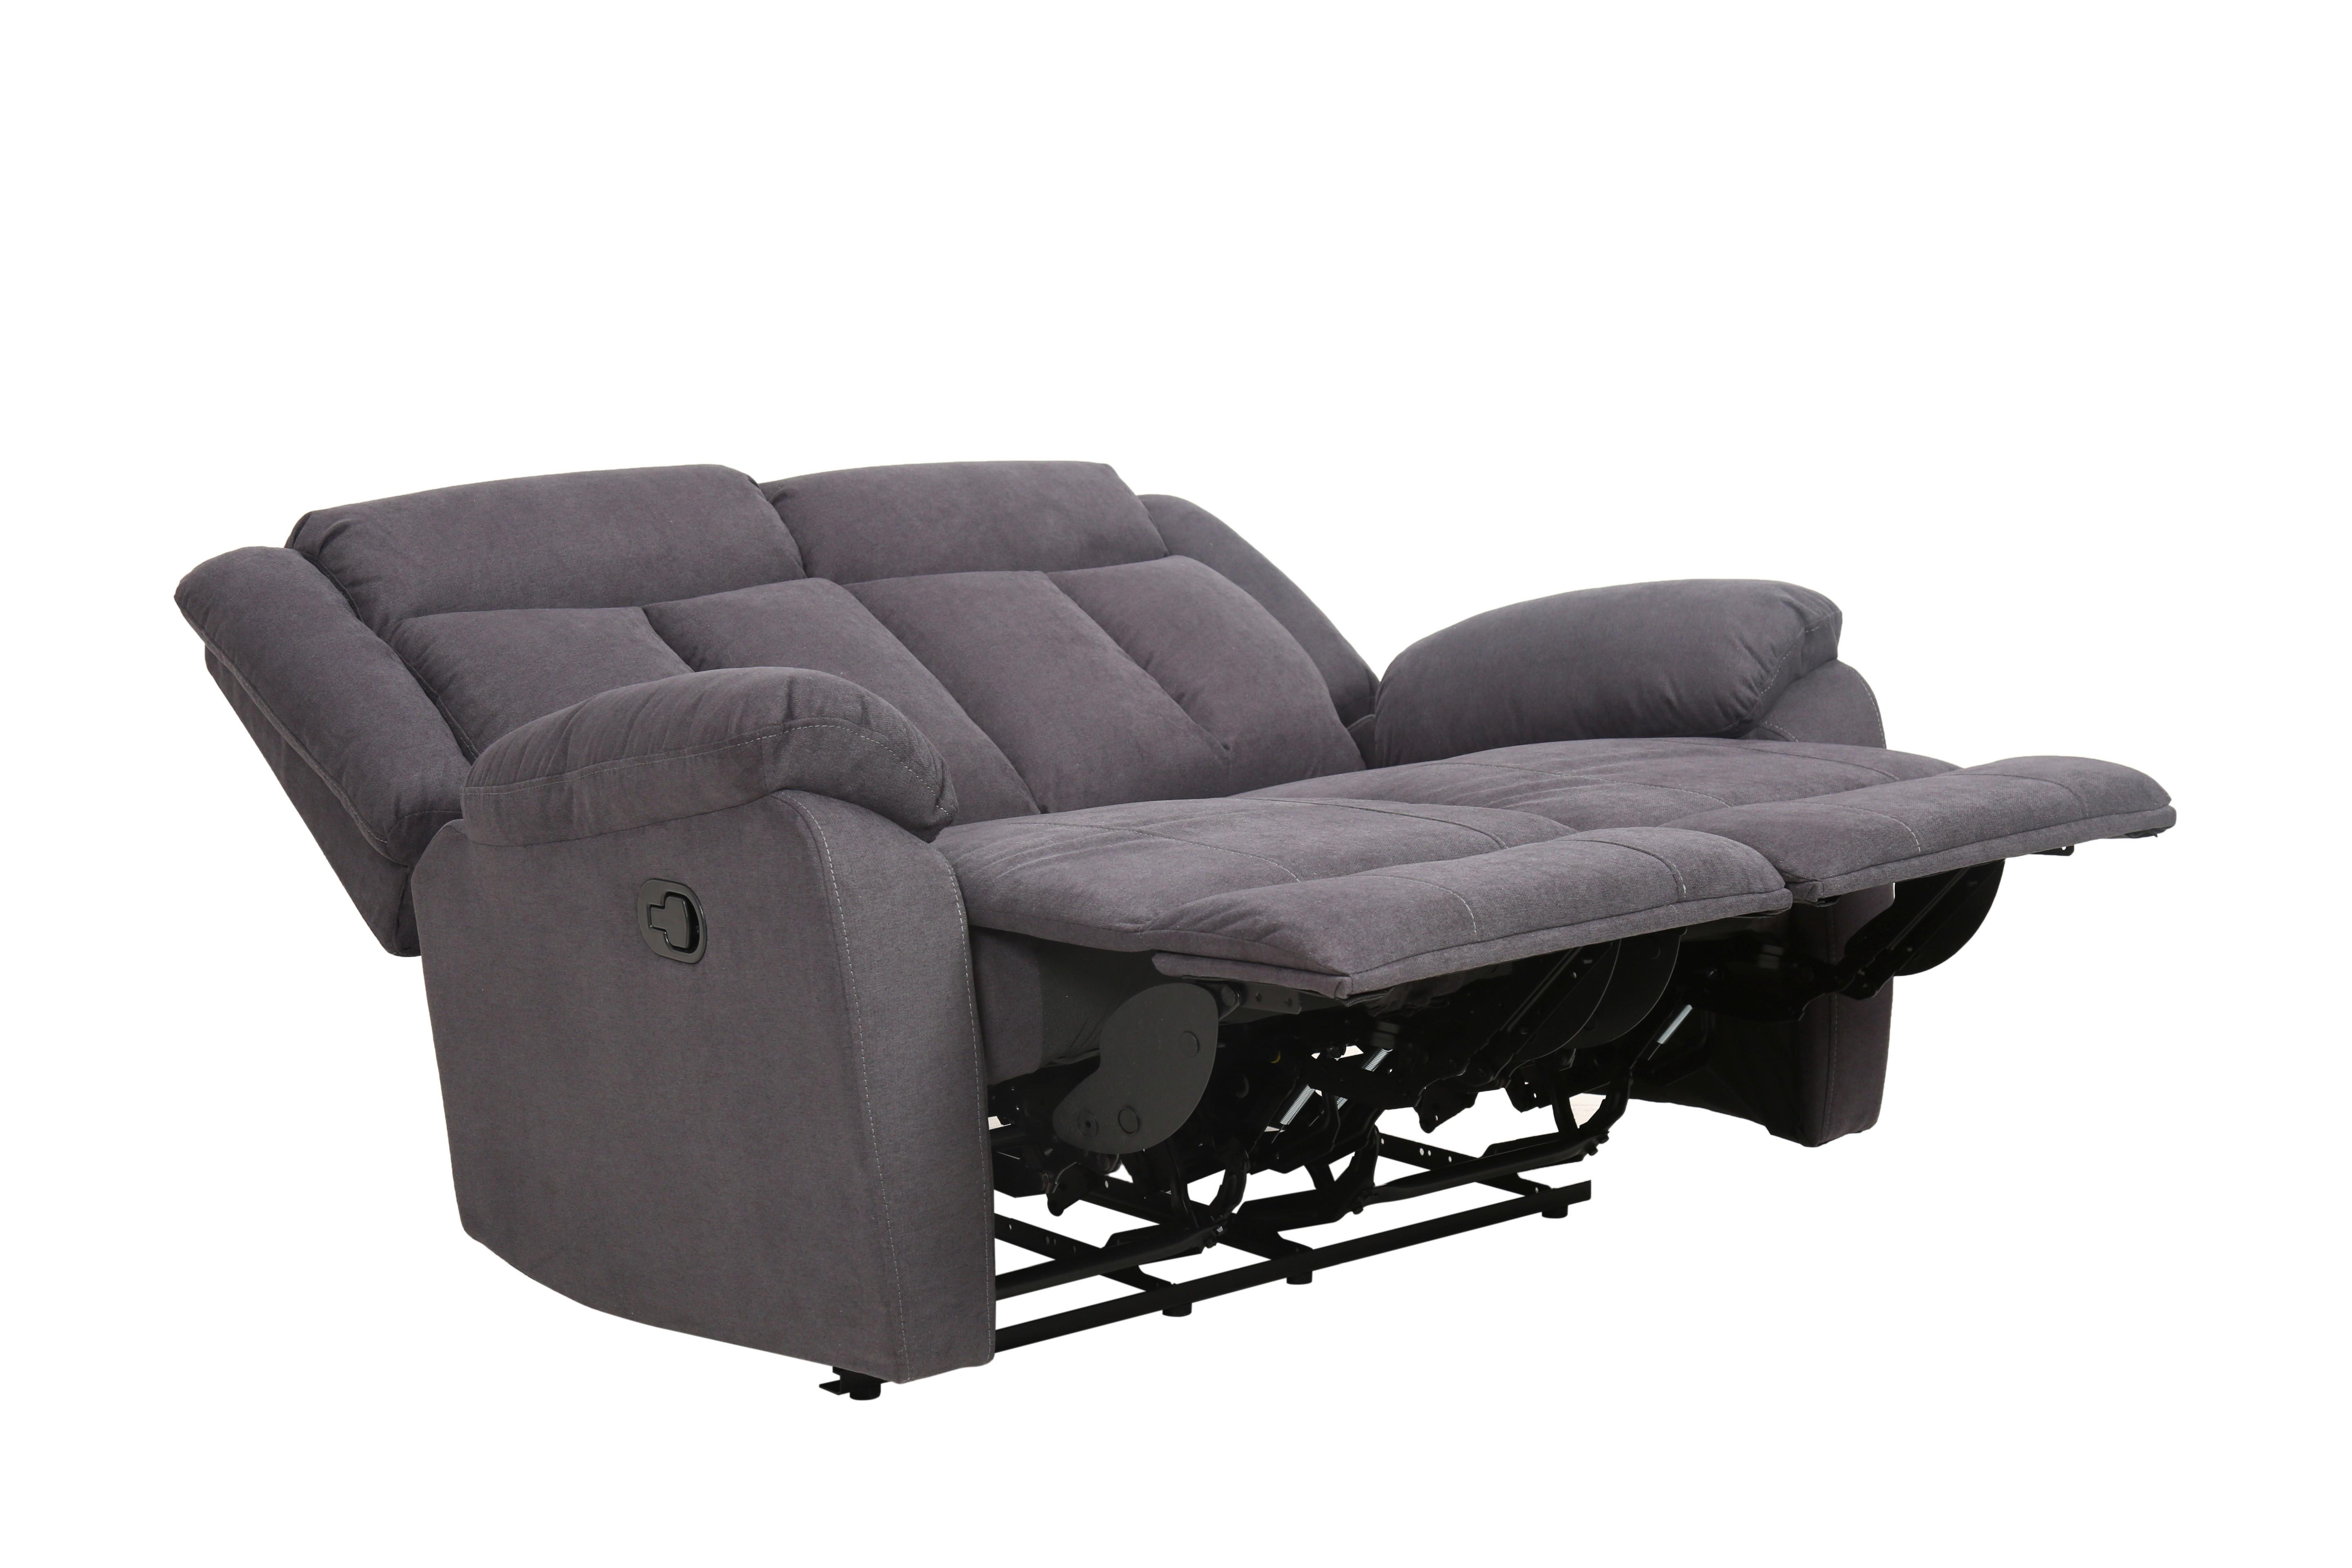 2-Sitzer-Sofa mit Relaxfunktion Oxford Grau - Schwarz/Grau, KONVENTIONELL, Holz/Textil (138/103/96cm) - Ondega